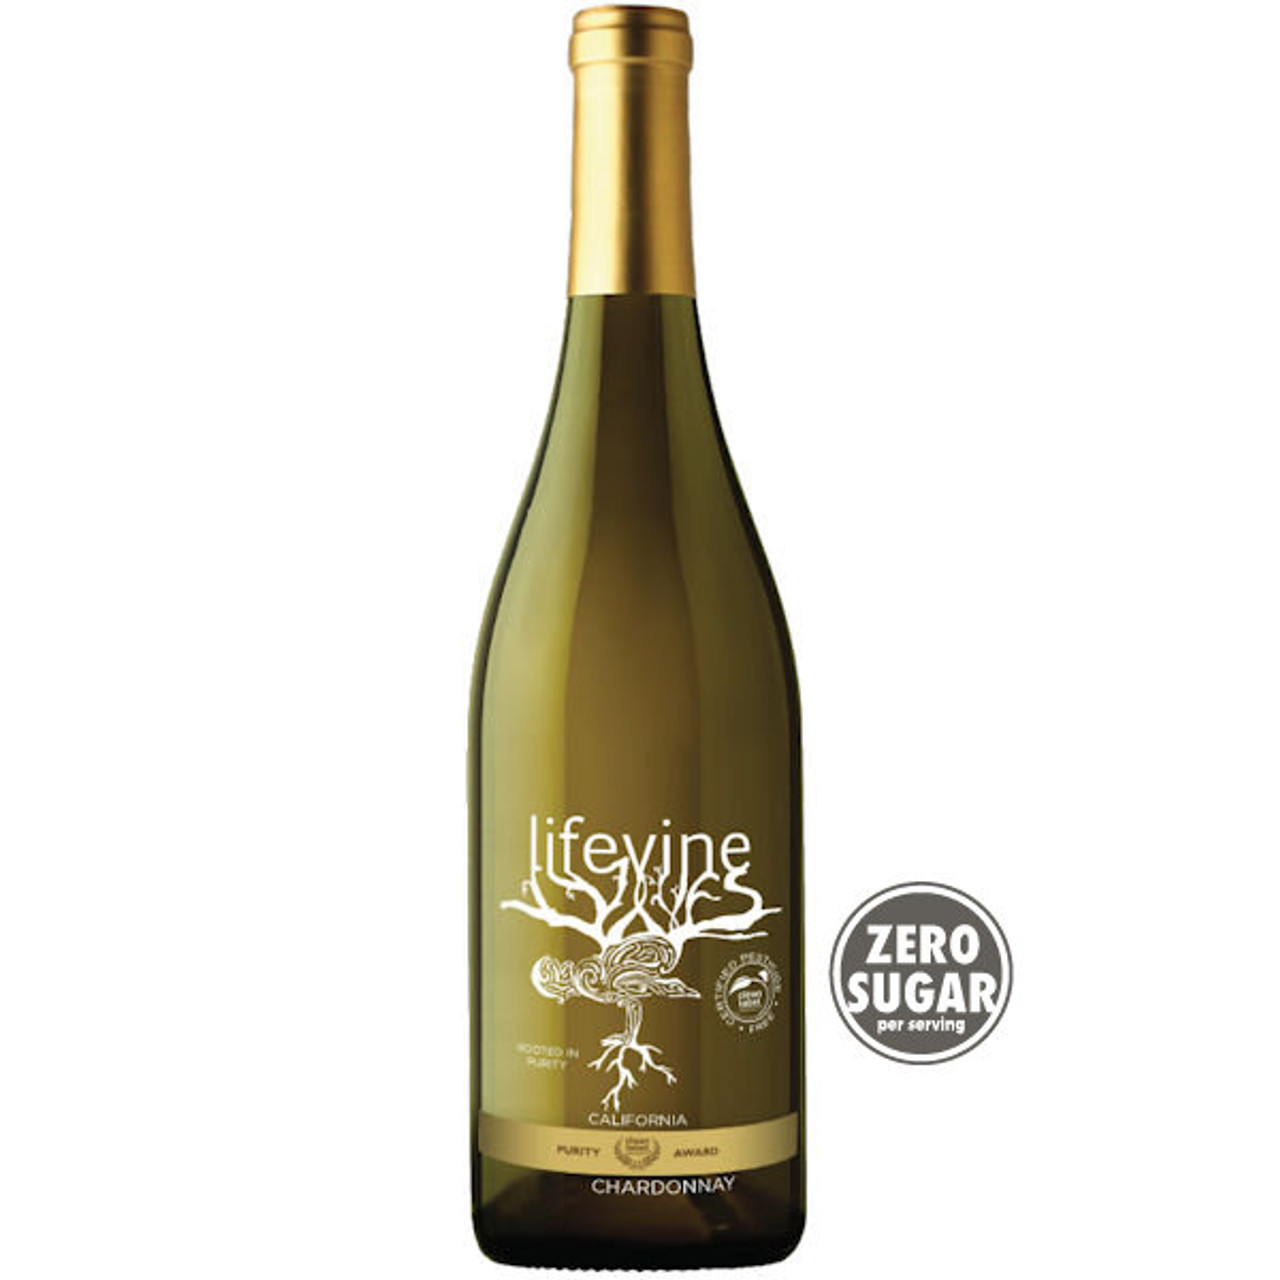 Lifevine Organic California Chardonnay 750ml